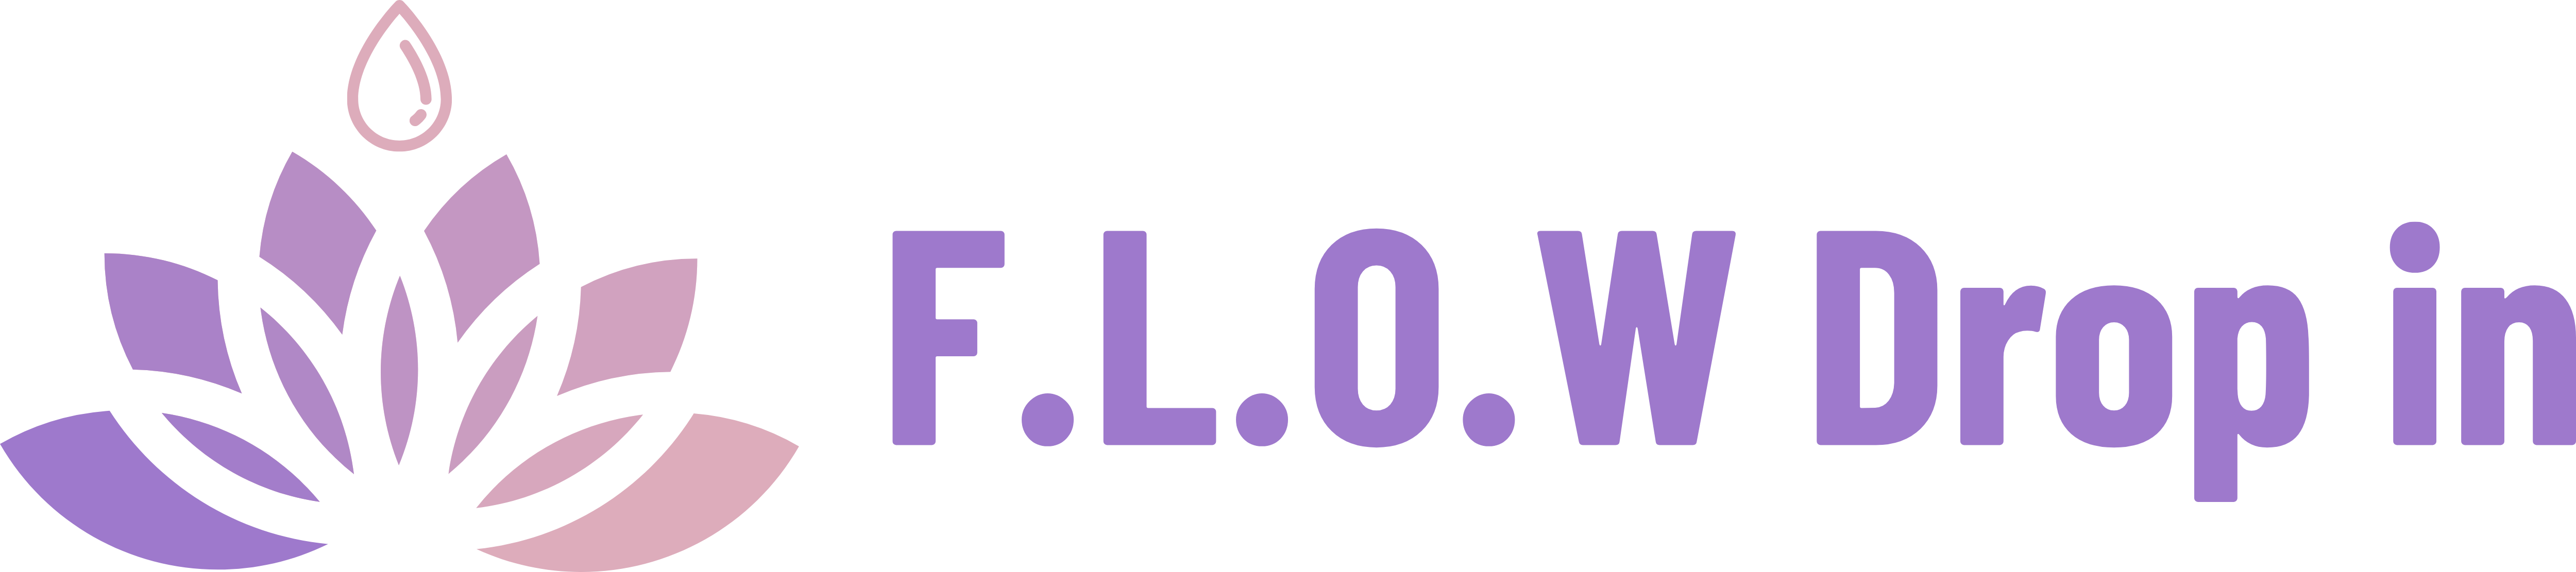 F.L.O.W Drop in logo